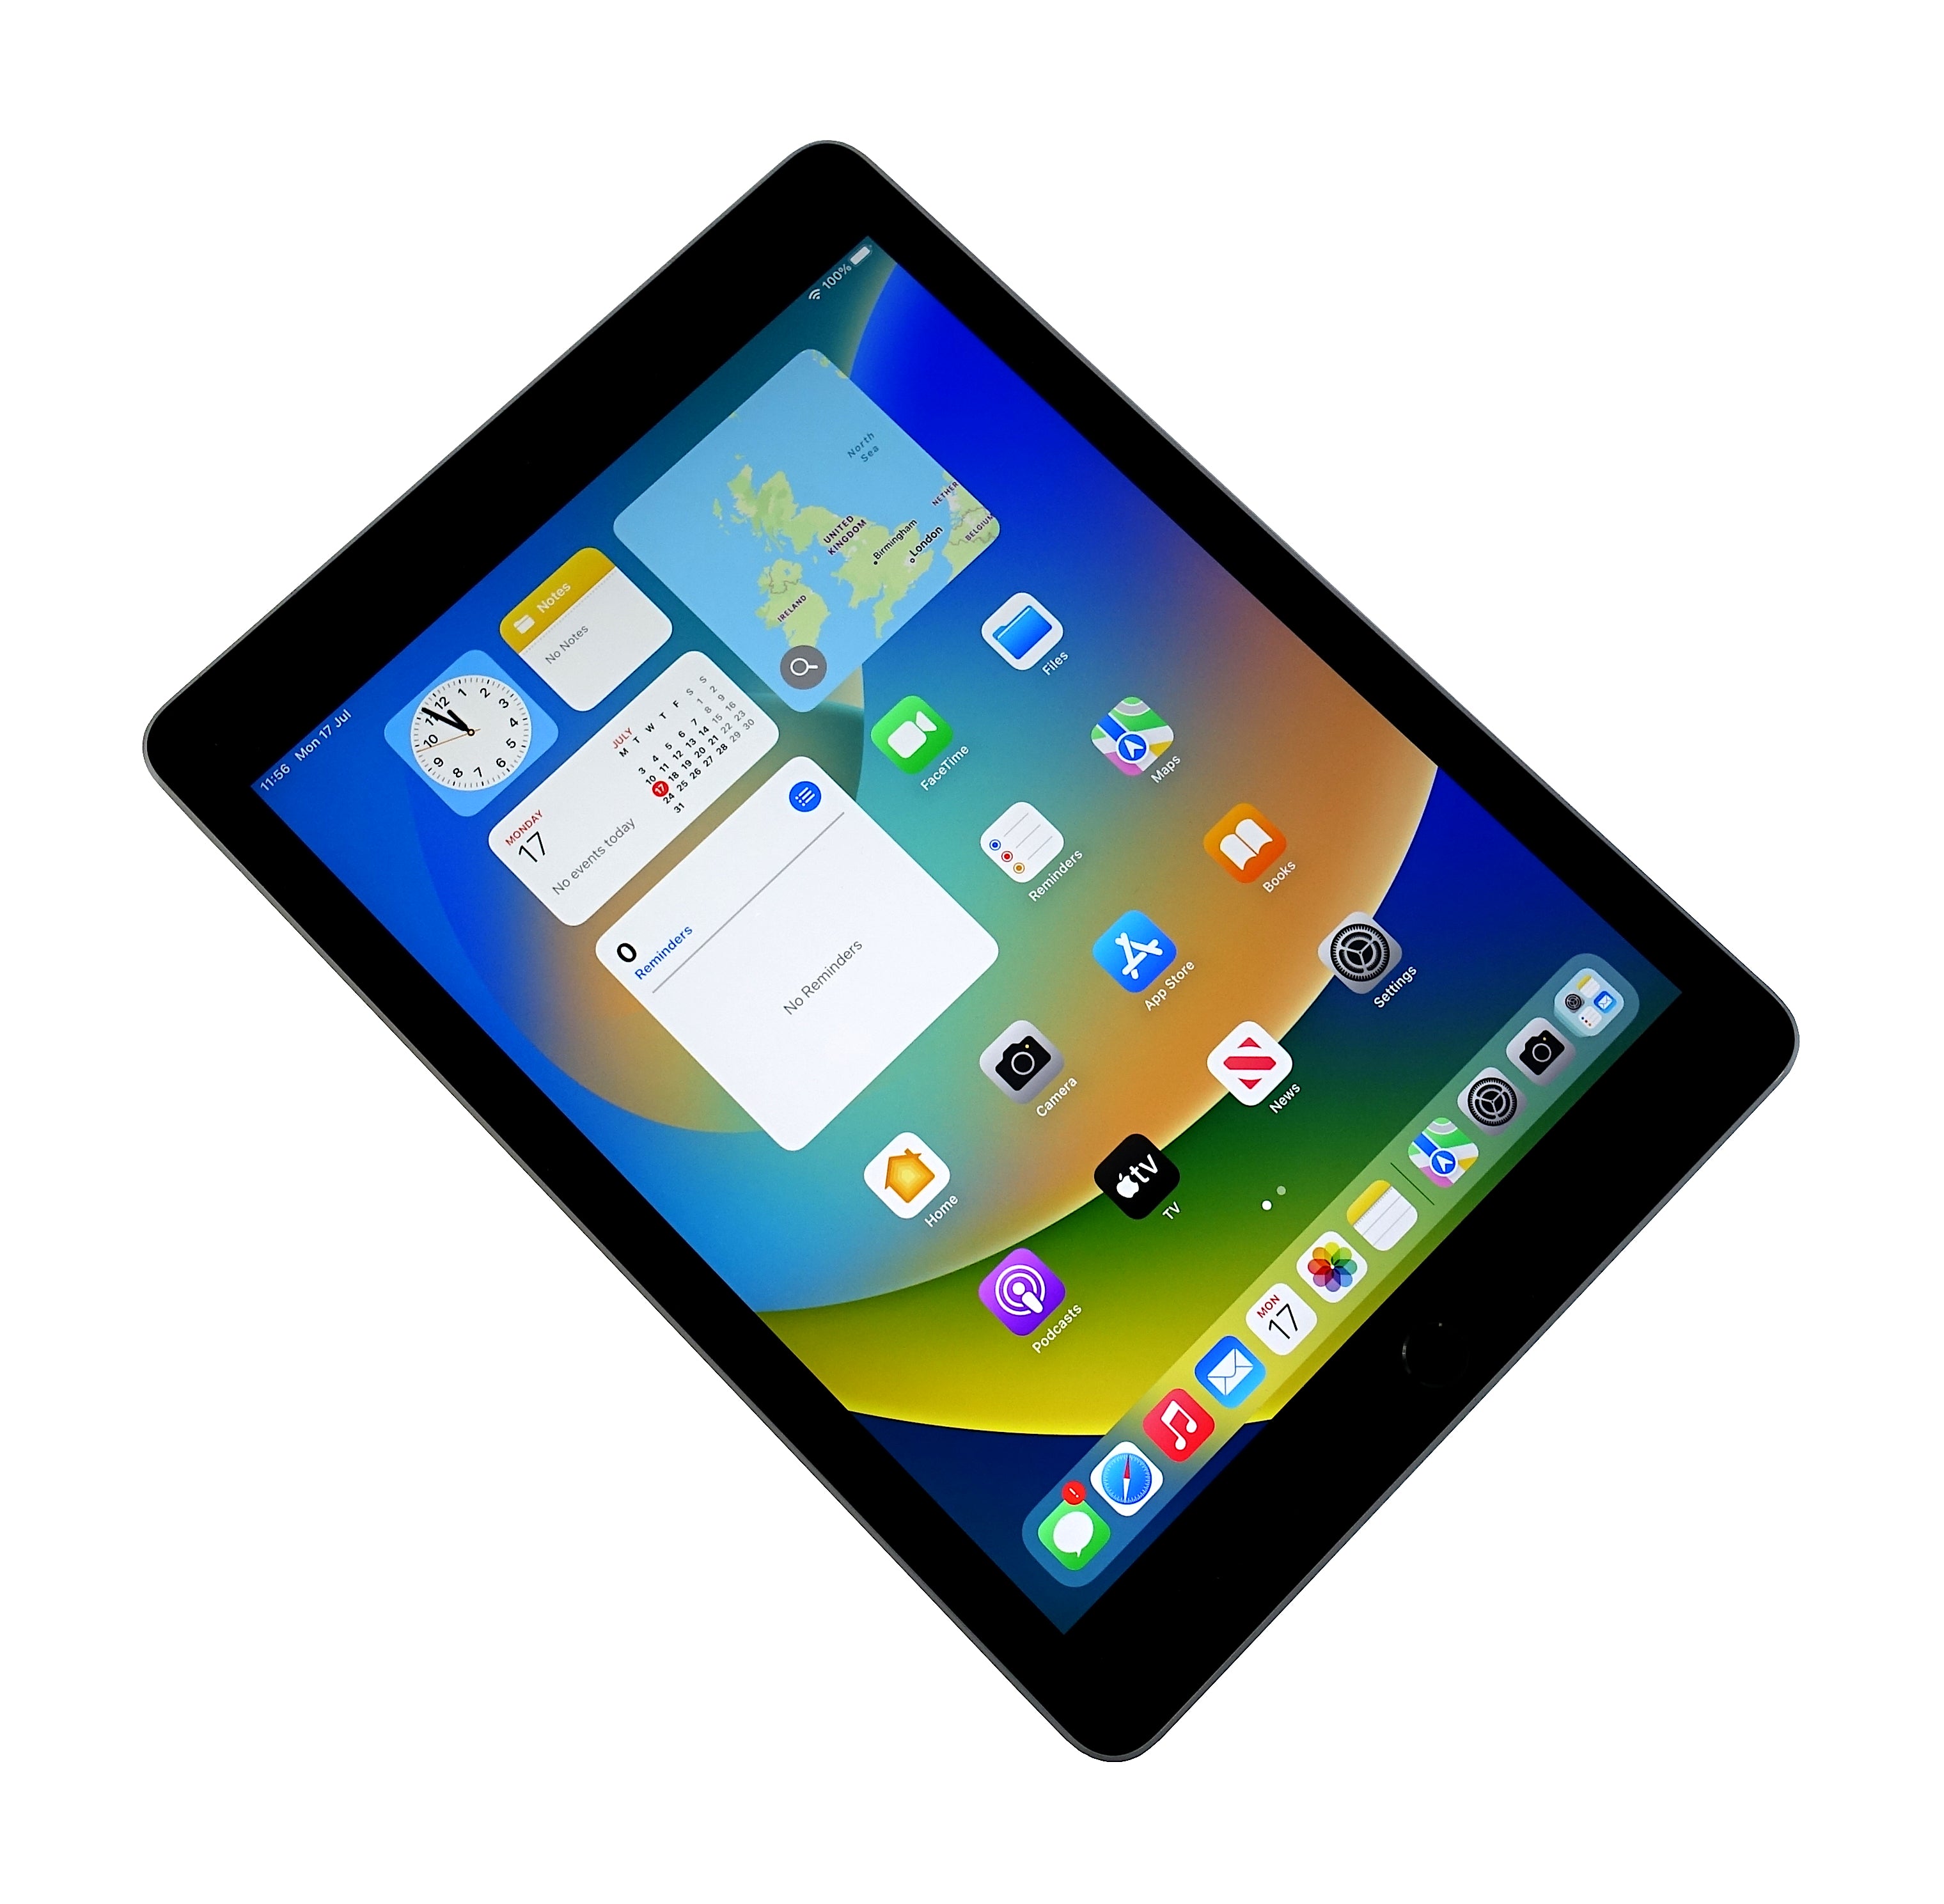 Apple iPad Pro 9.7" Tablet, 32GB, WiFi + GSM, Vodafone, Space Grey, A1674